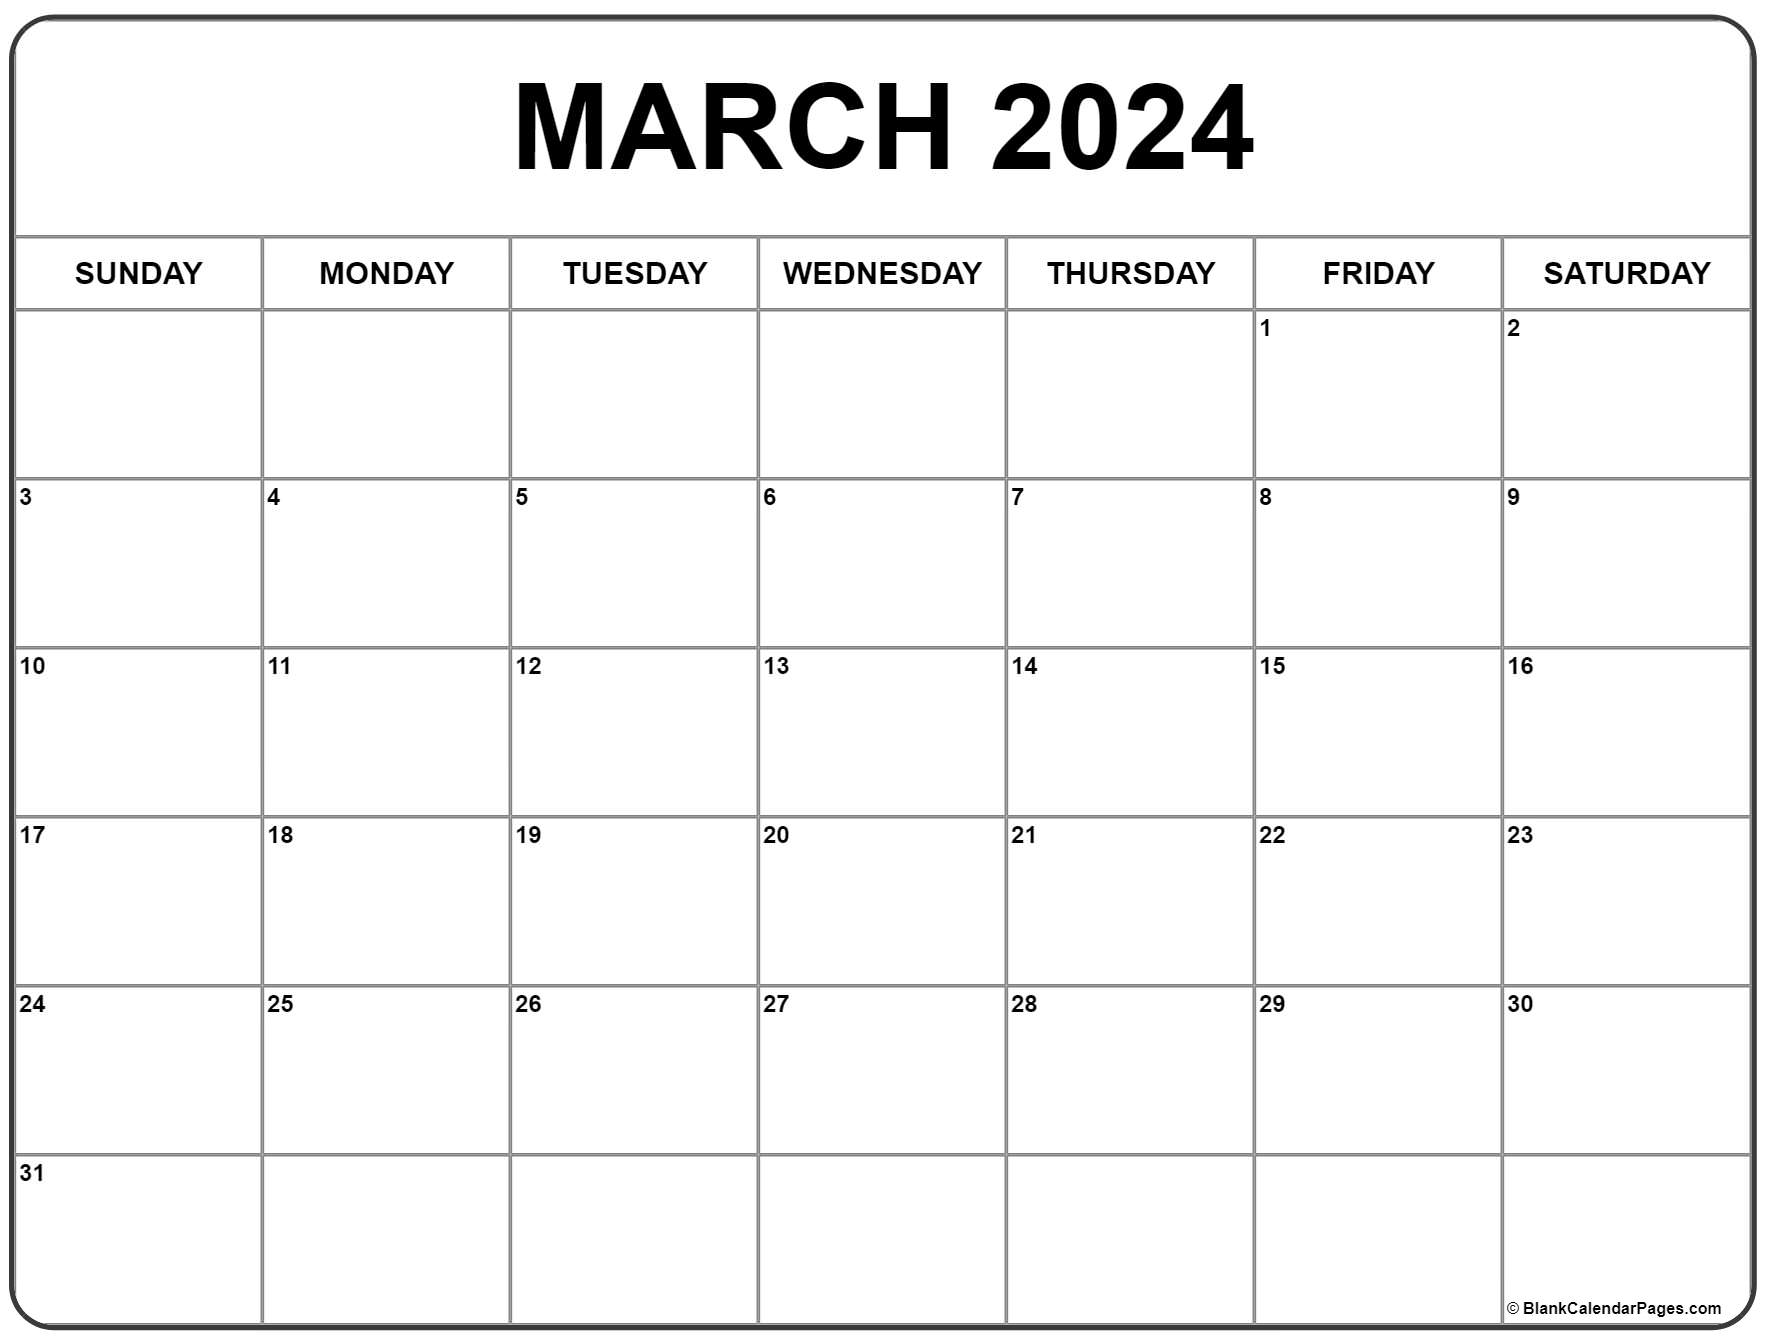 March 2024 Calendar | Free Printable Calendar for Free Calendar March 2024 Printable